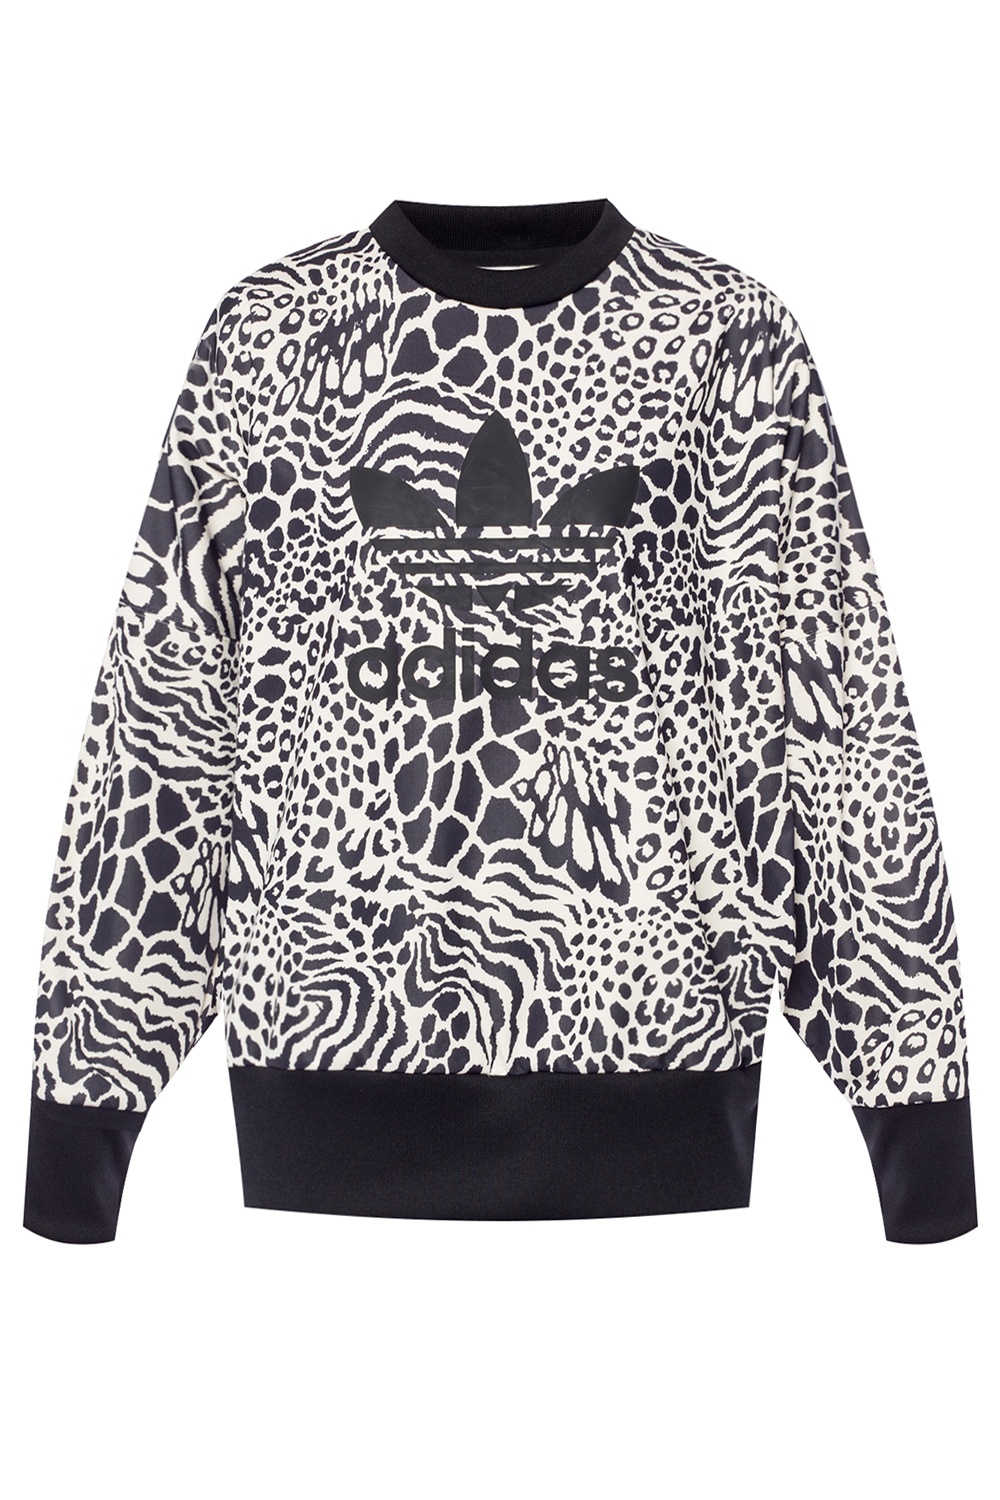 adidas animal print hoodie